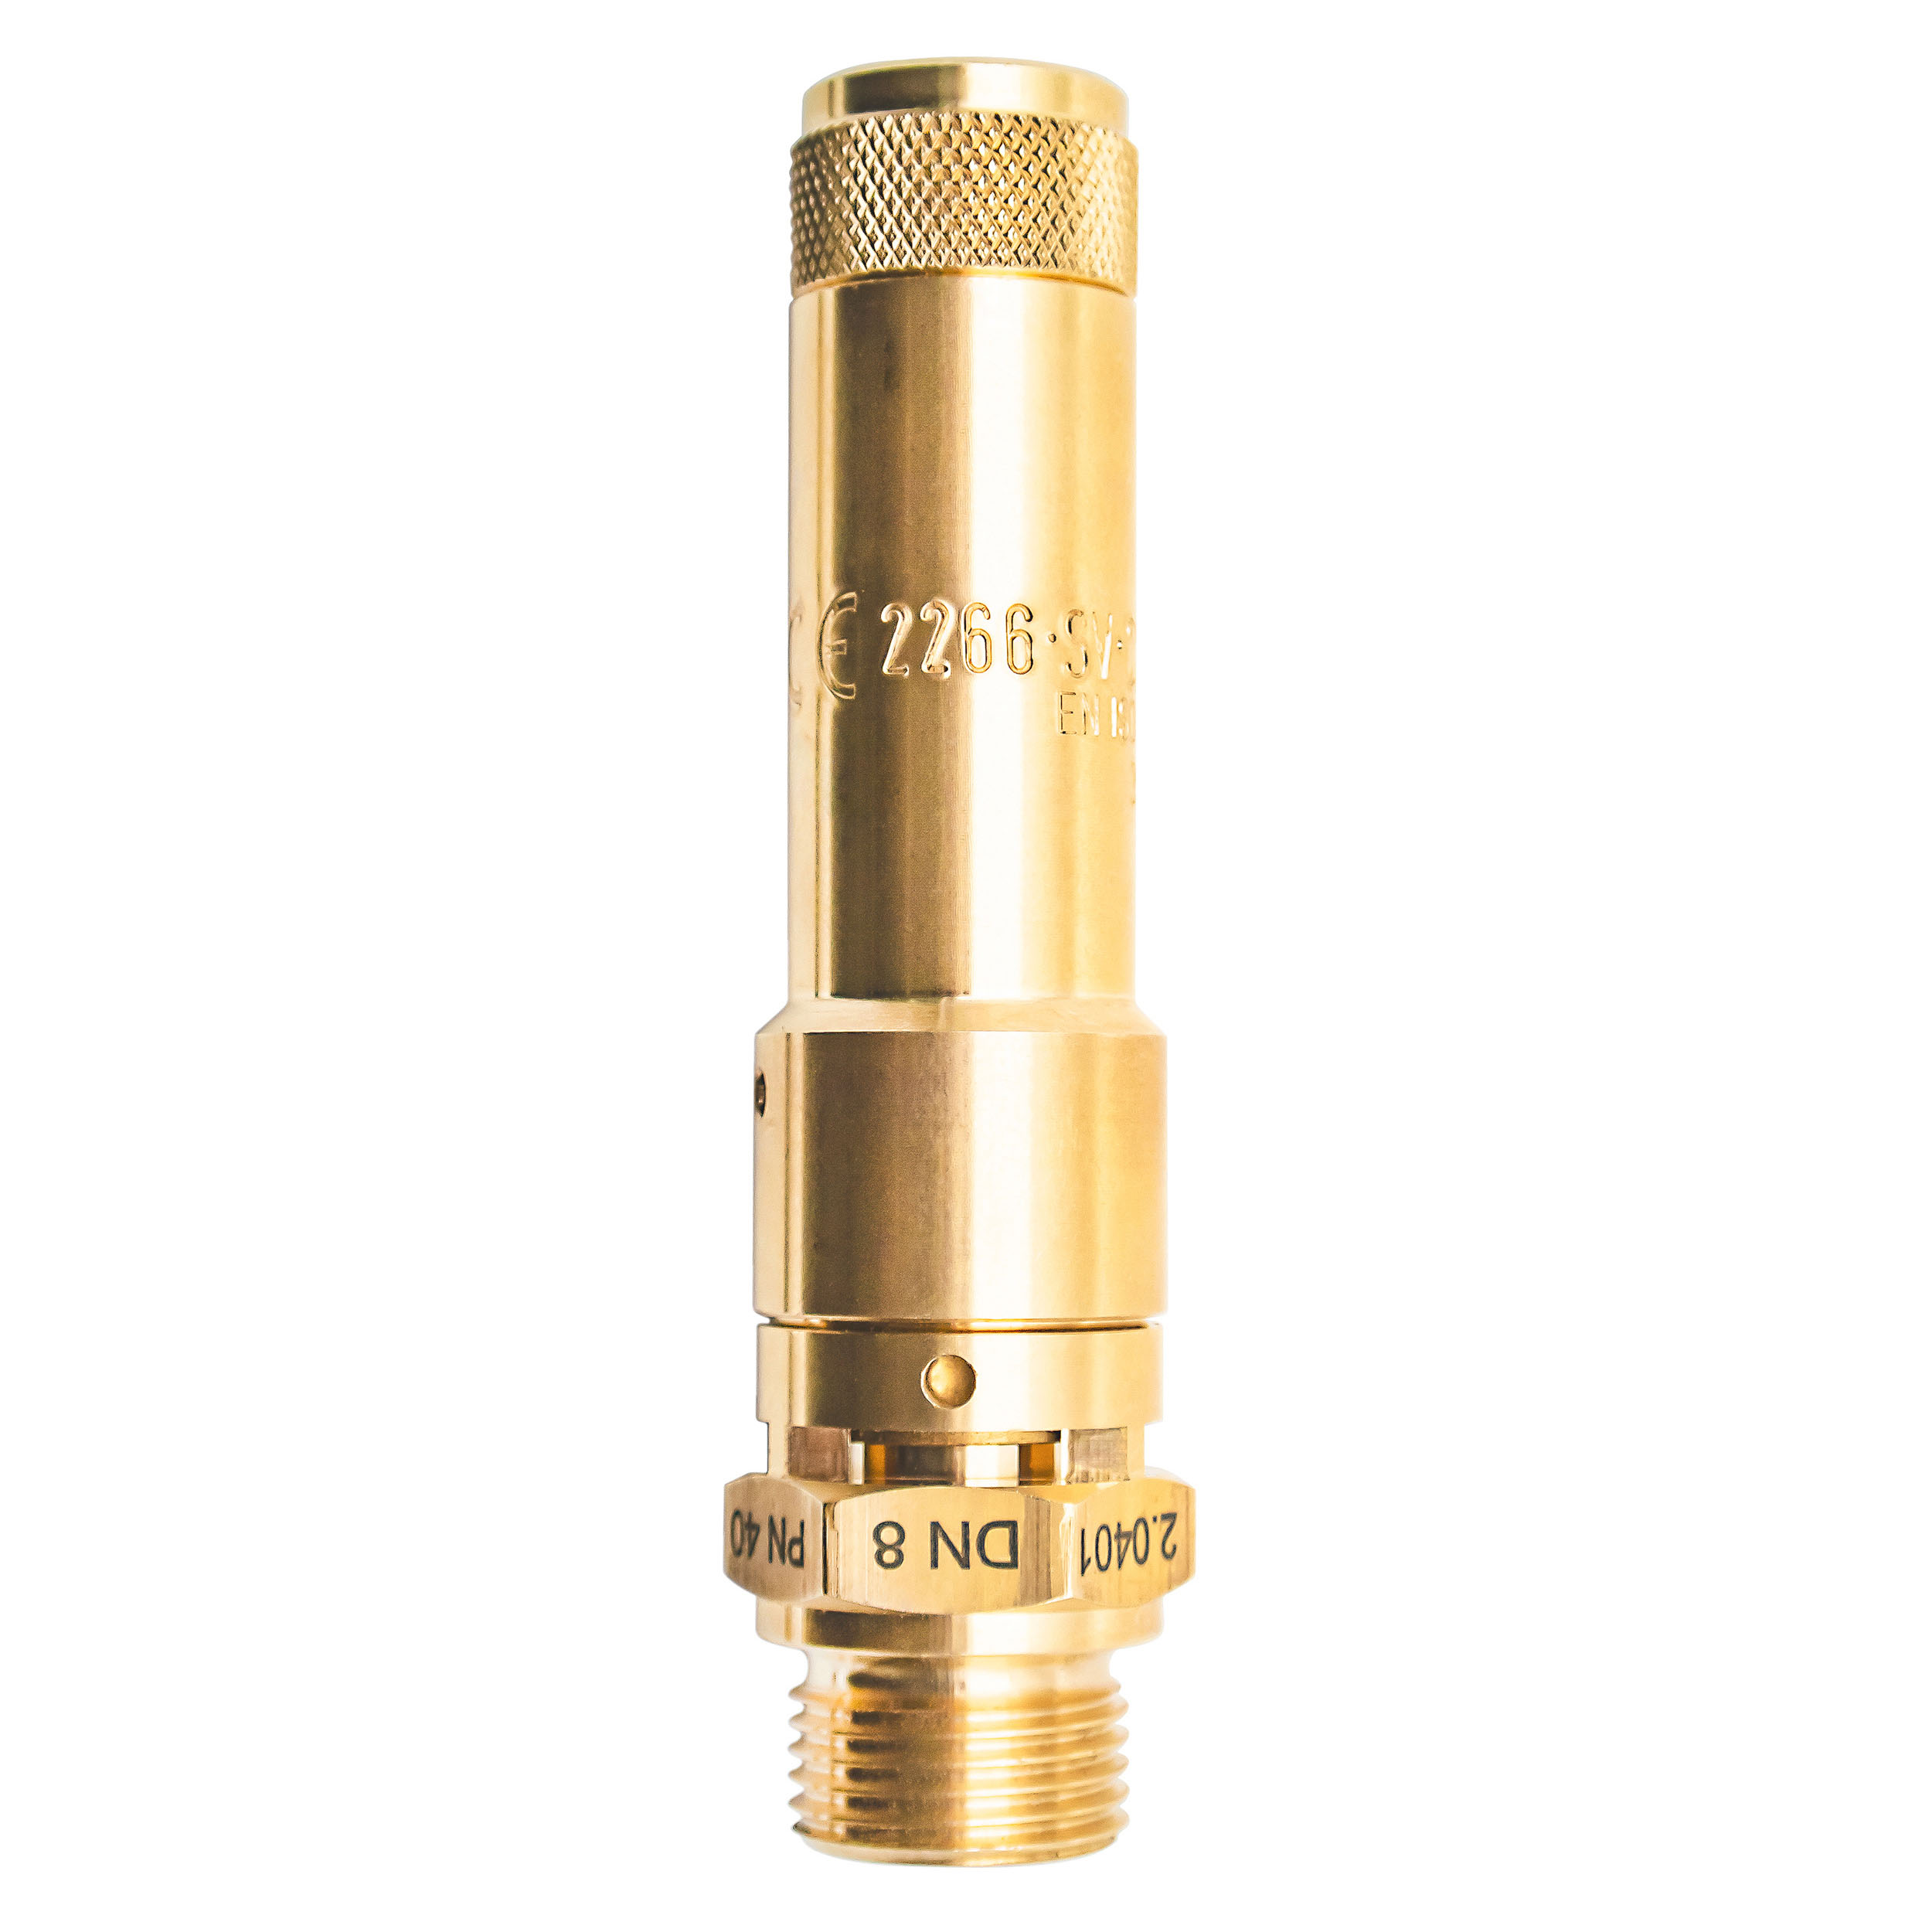 Savety valve component tested DN 8, G⅜, set pressure: 16.8 bar (243,6 psi)